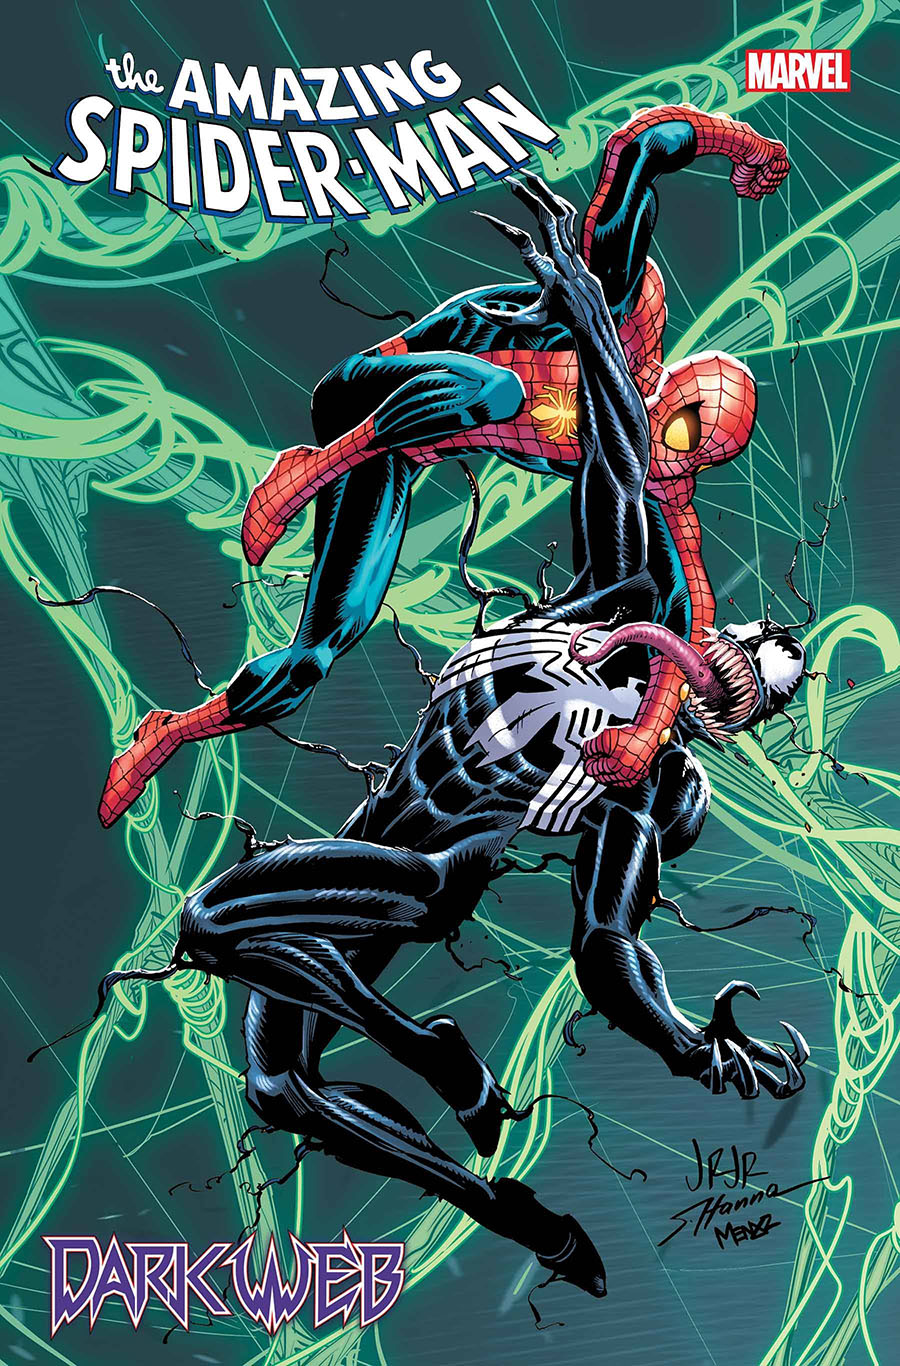 Amazing Spider-Man Vol 6 #15 Cover A Regular John Romita Jr Cover (Dark Web Tie-In)